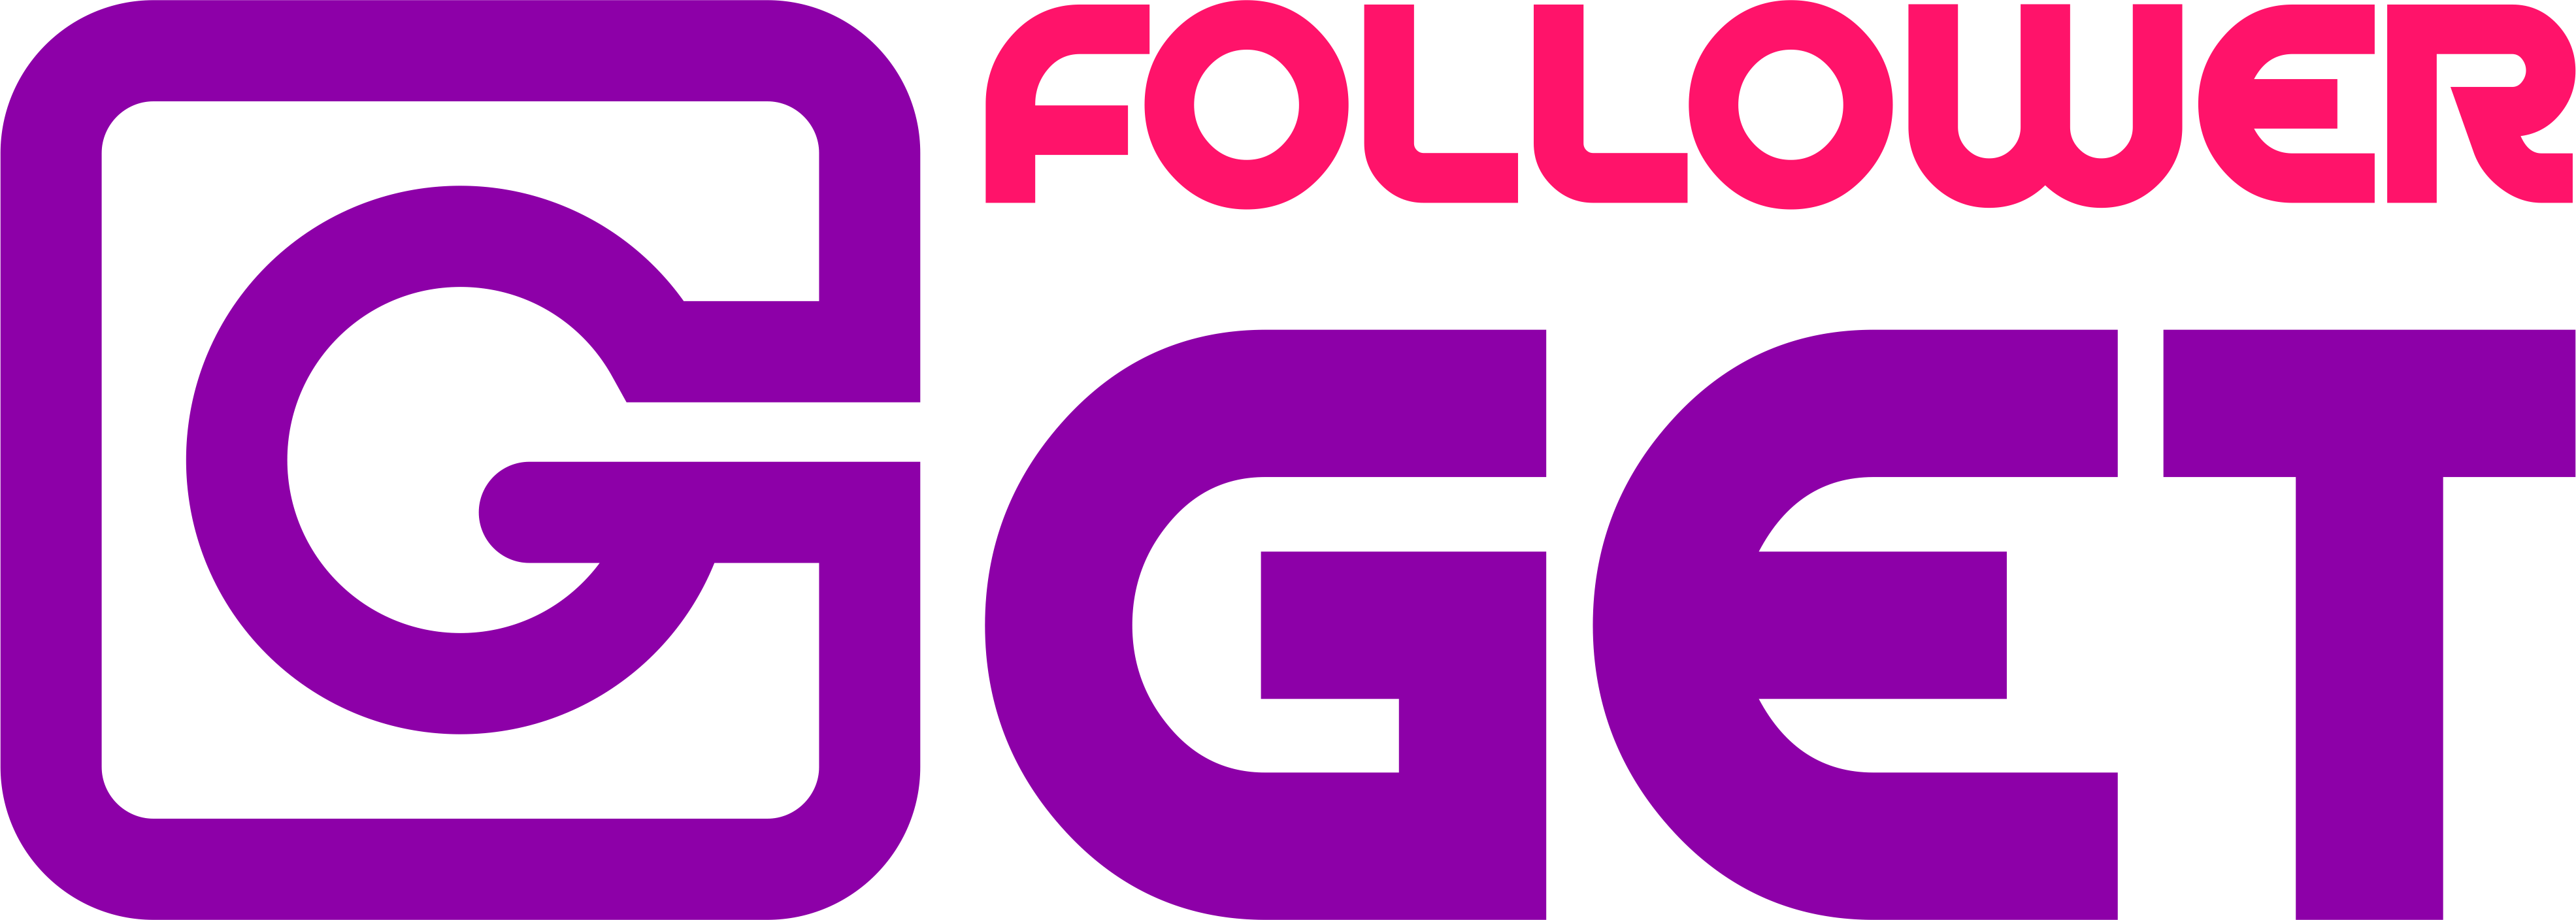 followerget logo buy followers